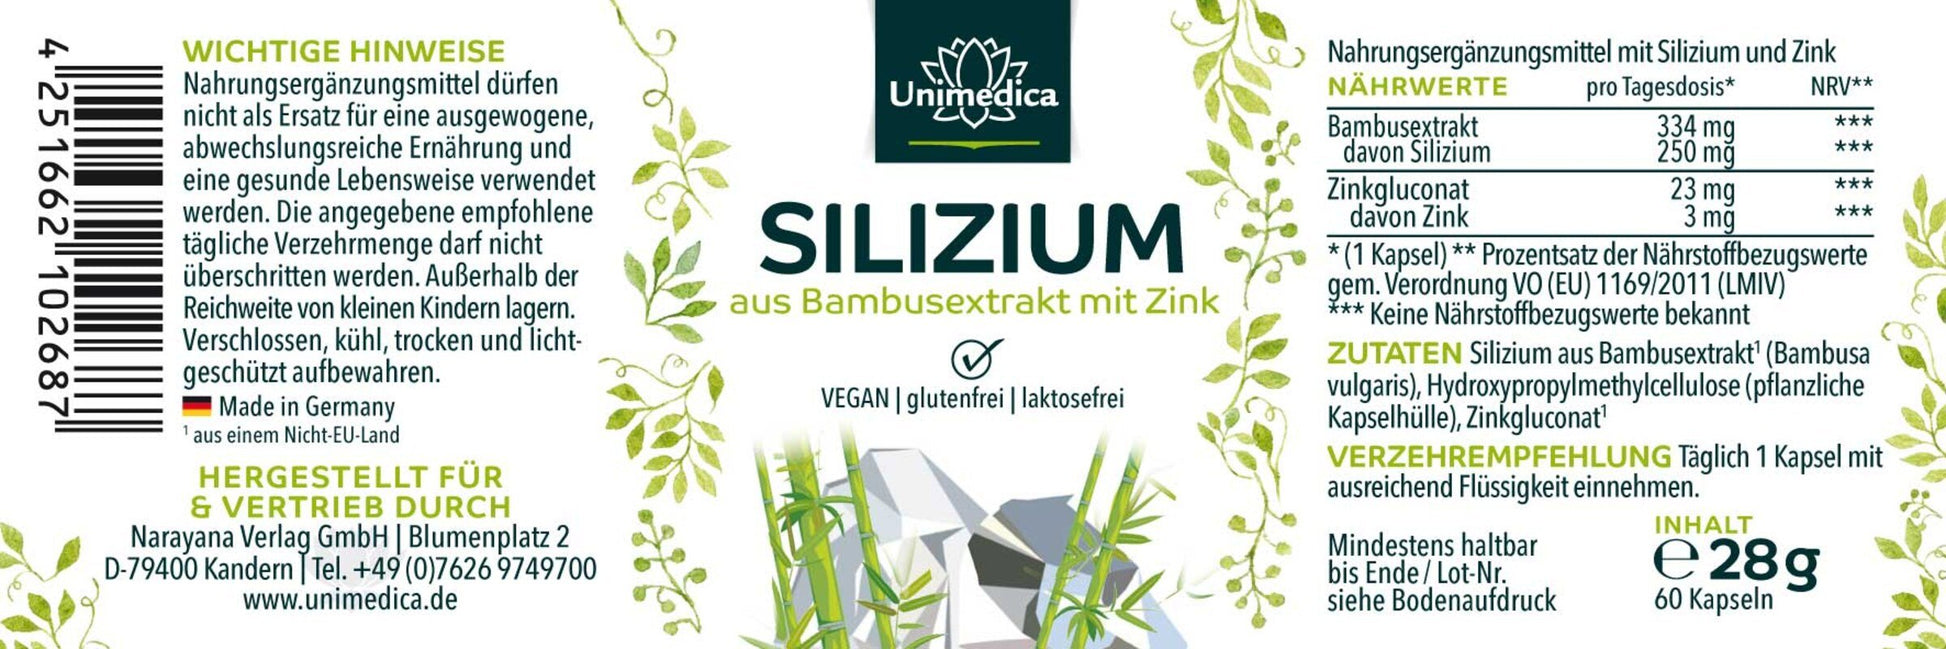 Silizium aus Bambus mit Zink - 250 mg und 3 mg pro Tagesdosis - 60 Kapseln Etkett